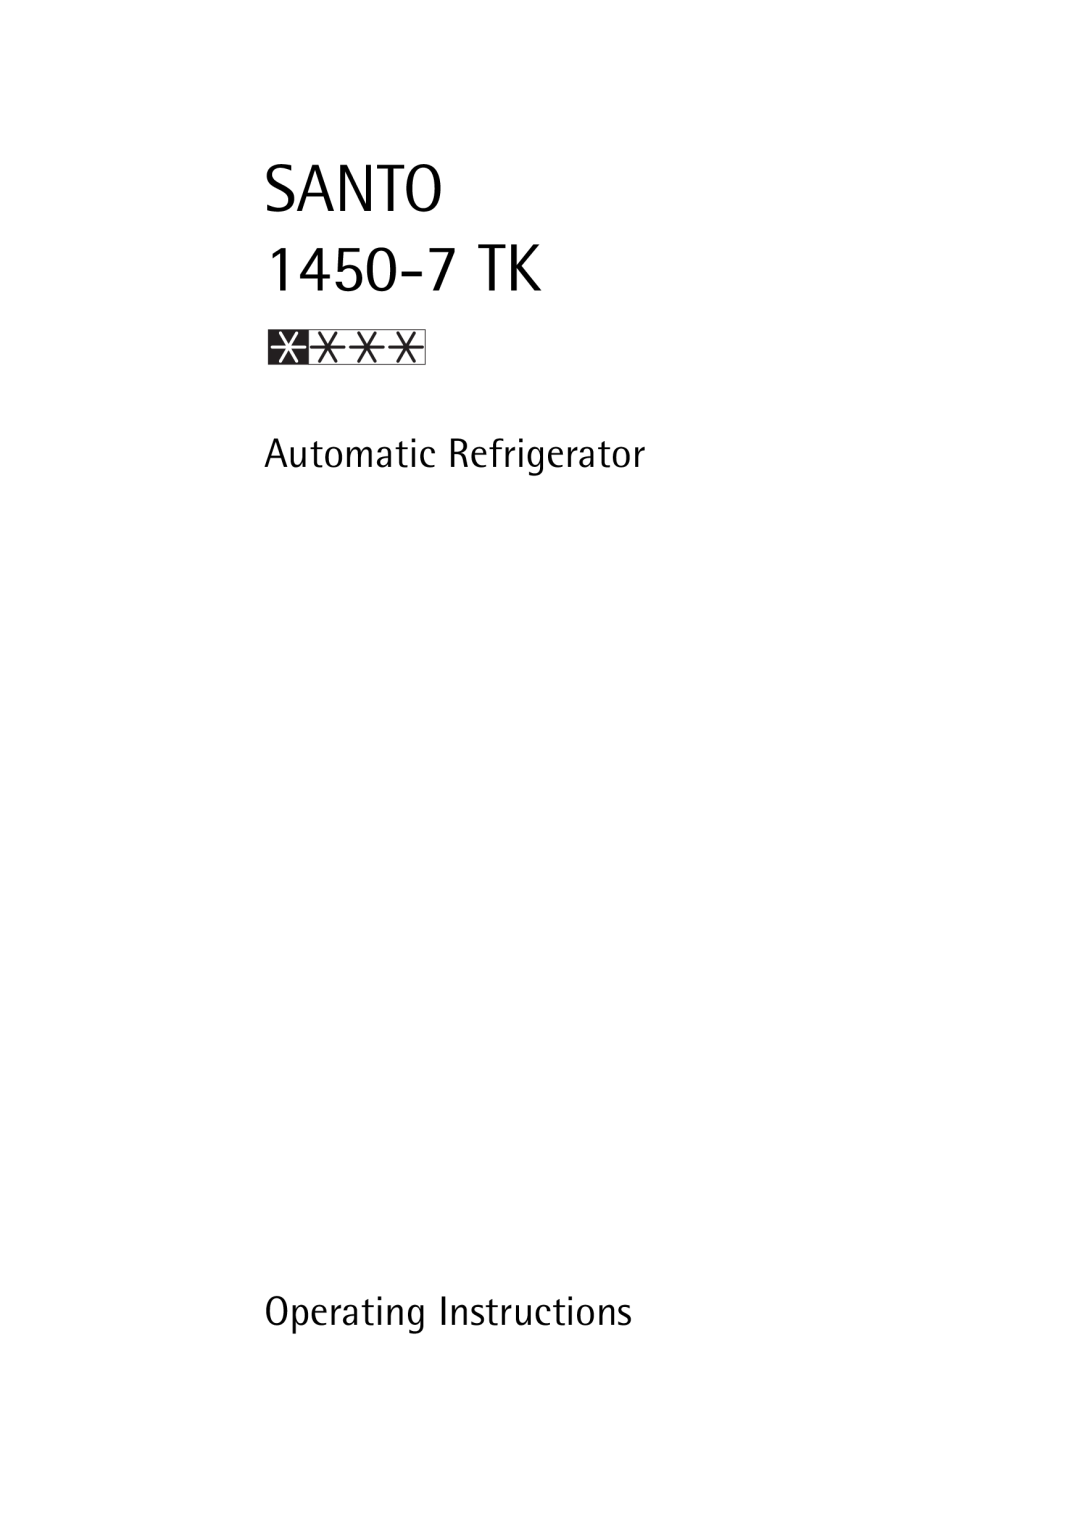 AEG manual SANTO 1450-7 TK, Automatic Refrigerator, Operating Instructions 